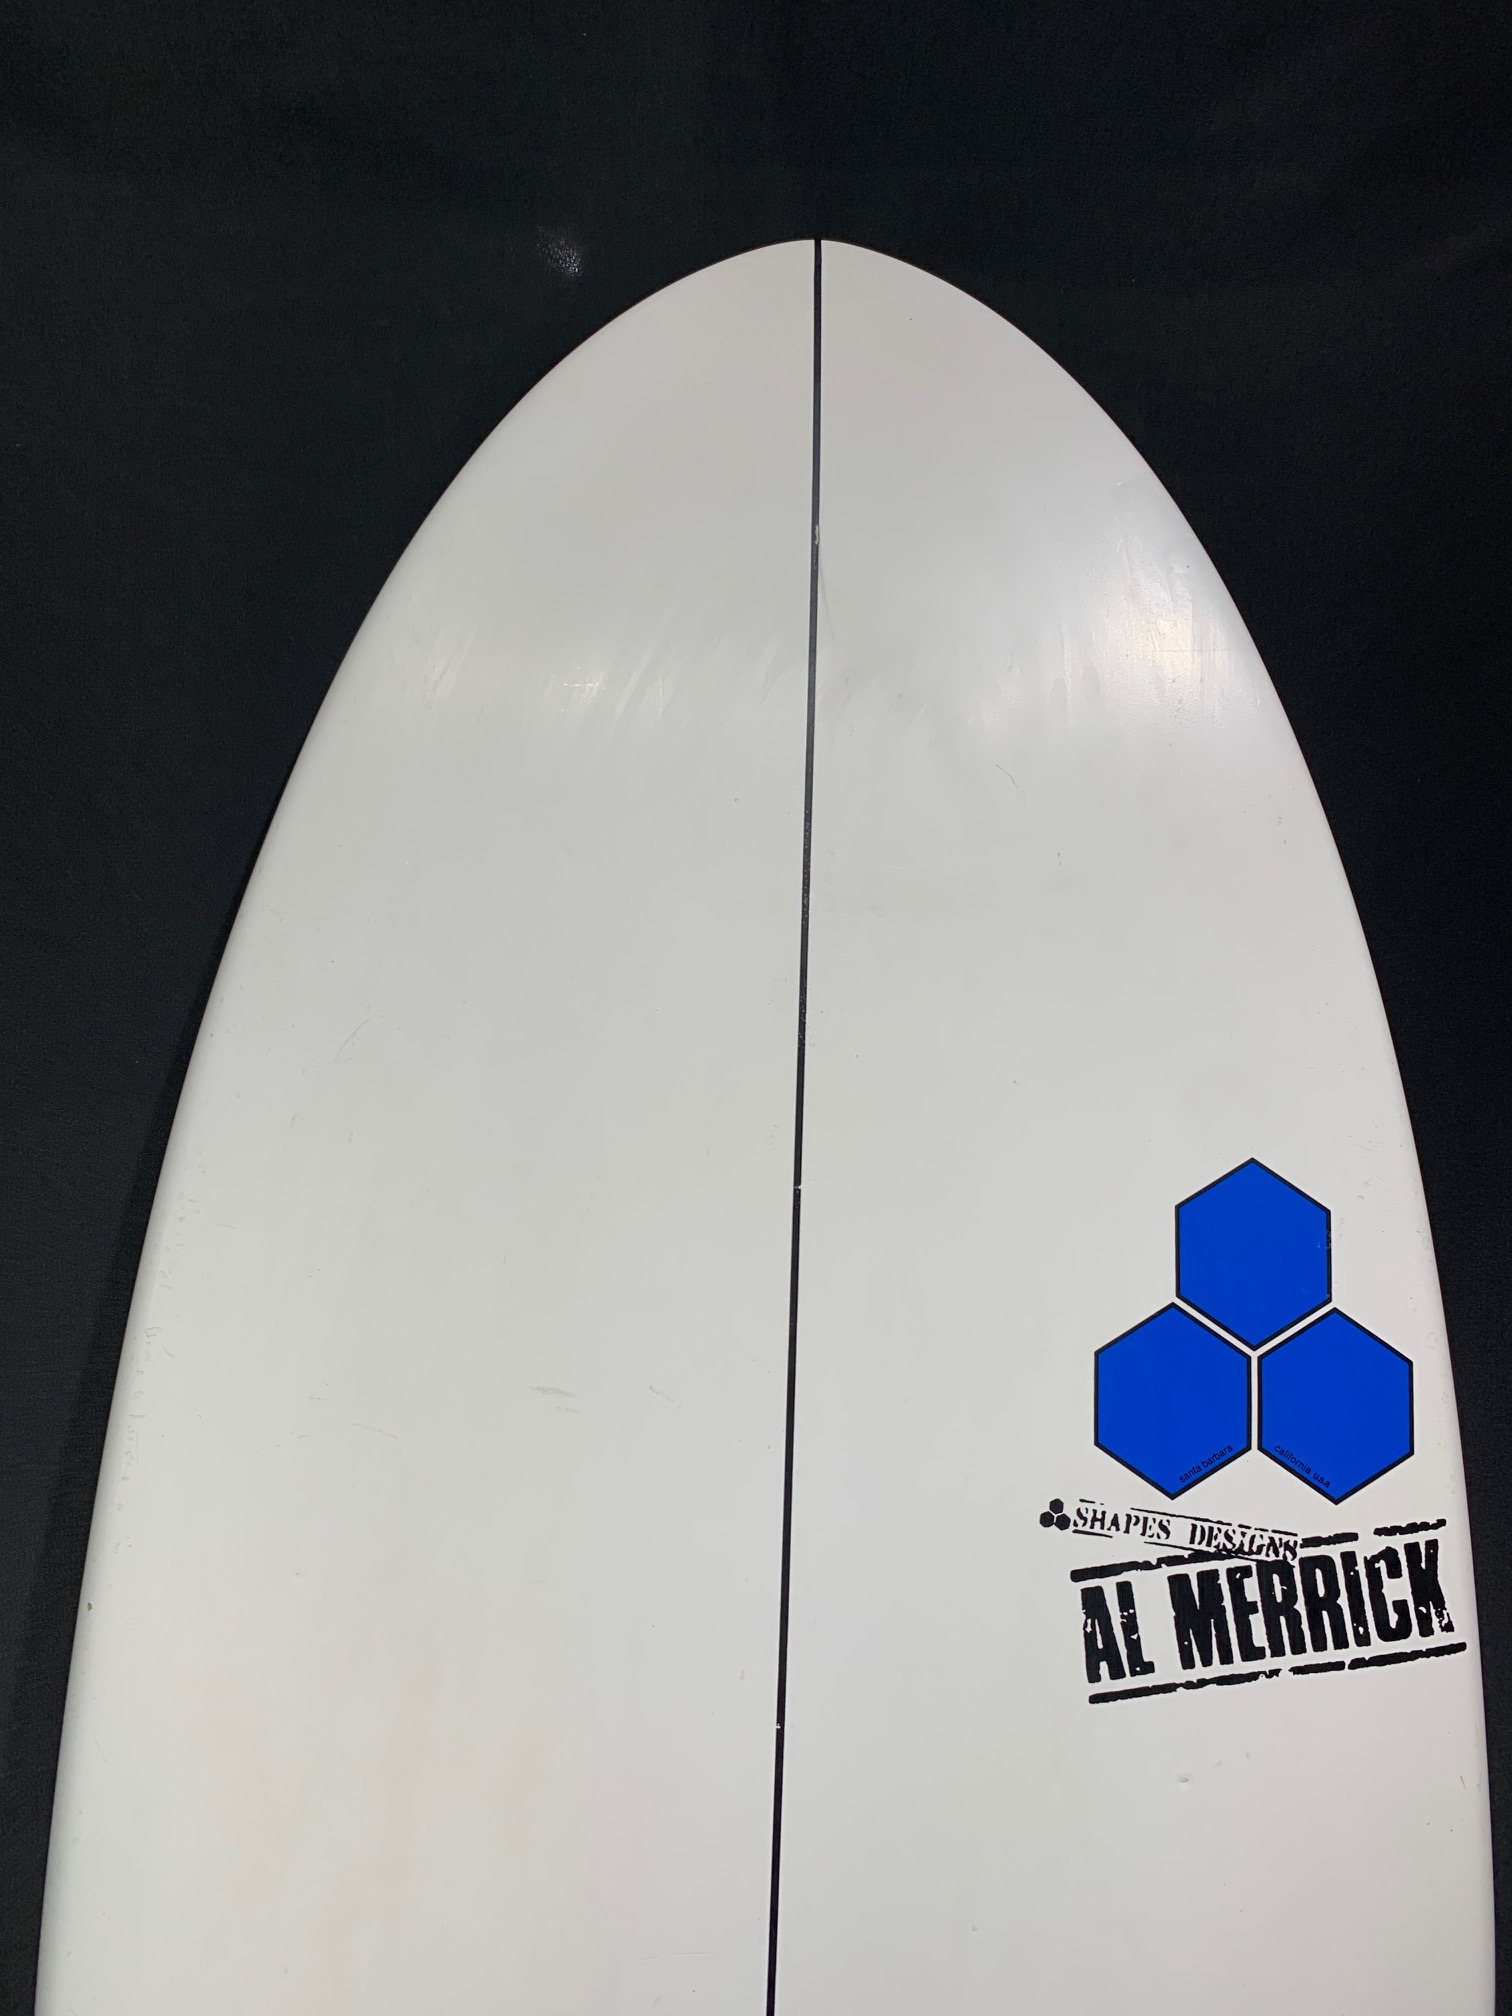 surfboards-17